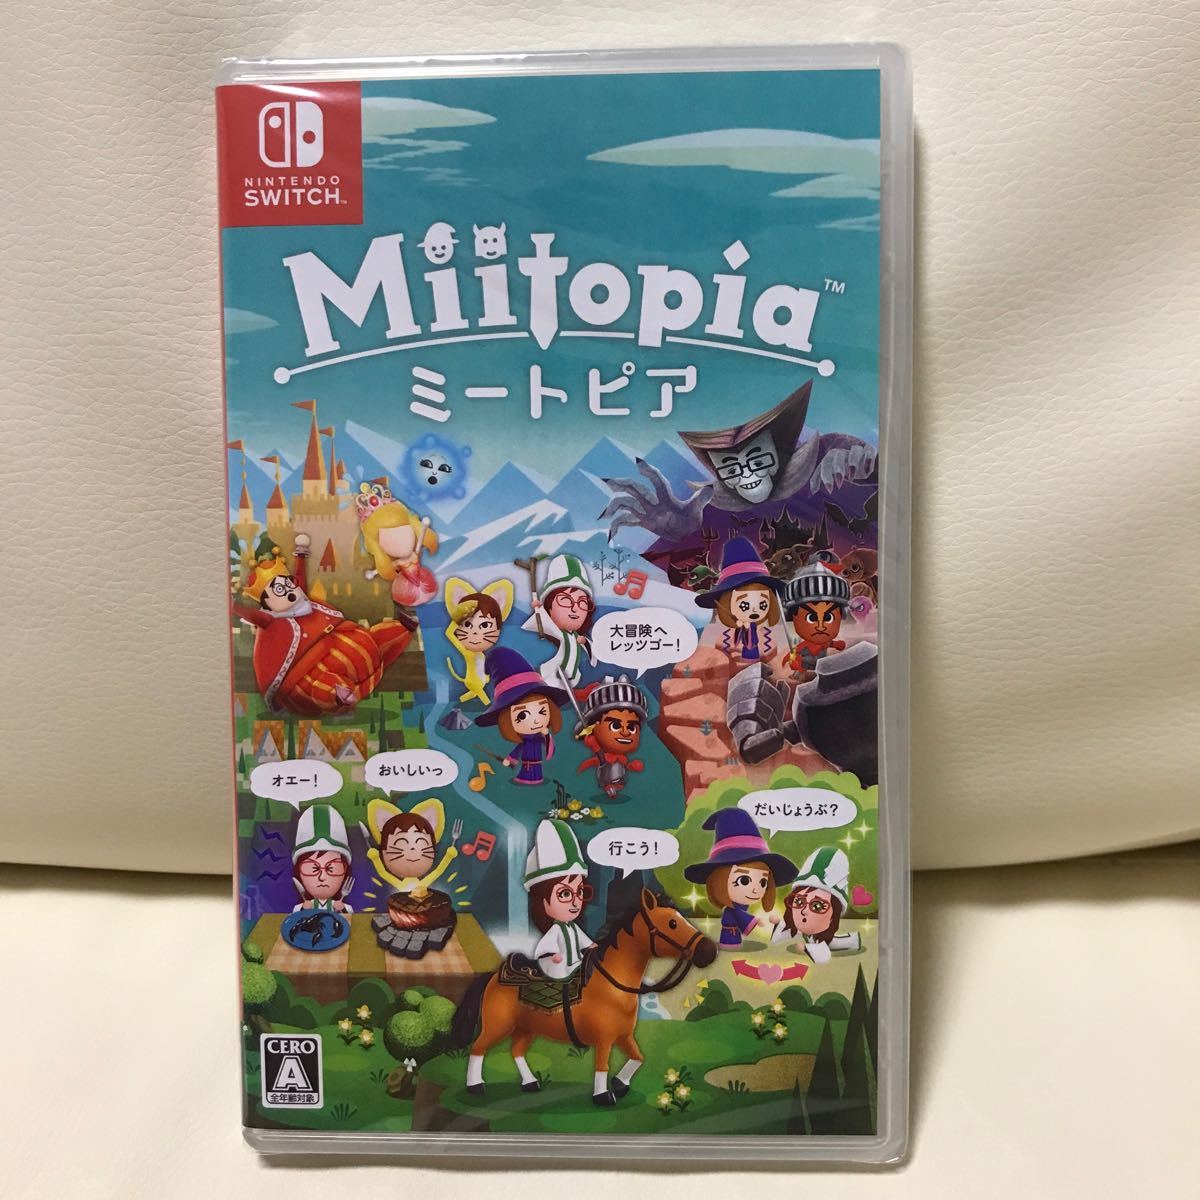 【Switch】 Miitopia  ミートピア switch  新品未開封